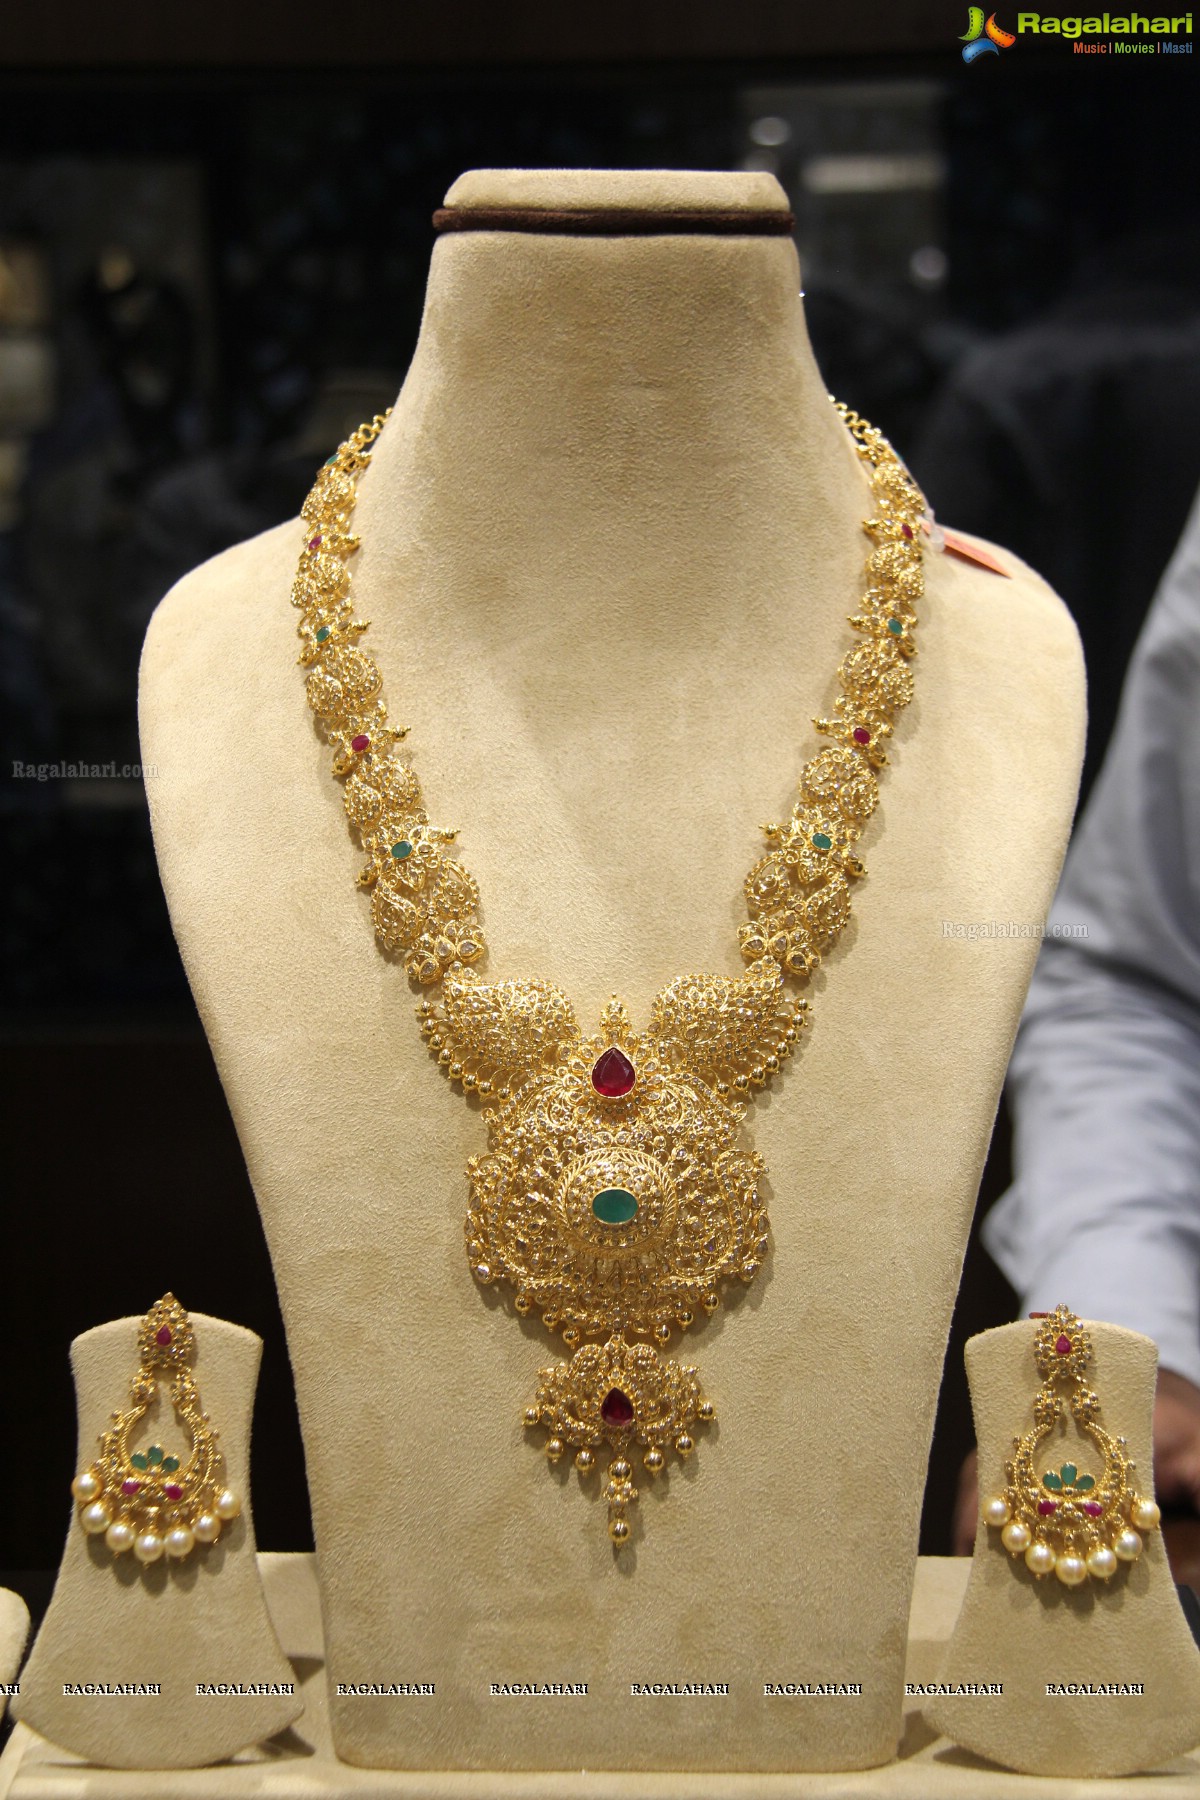 Mannara Chopra launches Manepally Jewellers Vaddanam